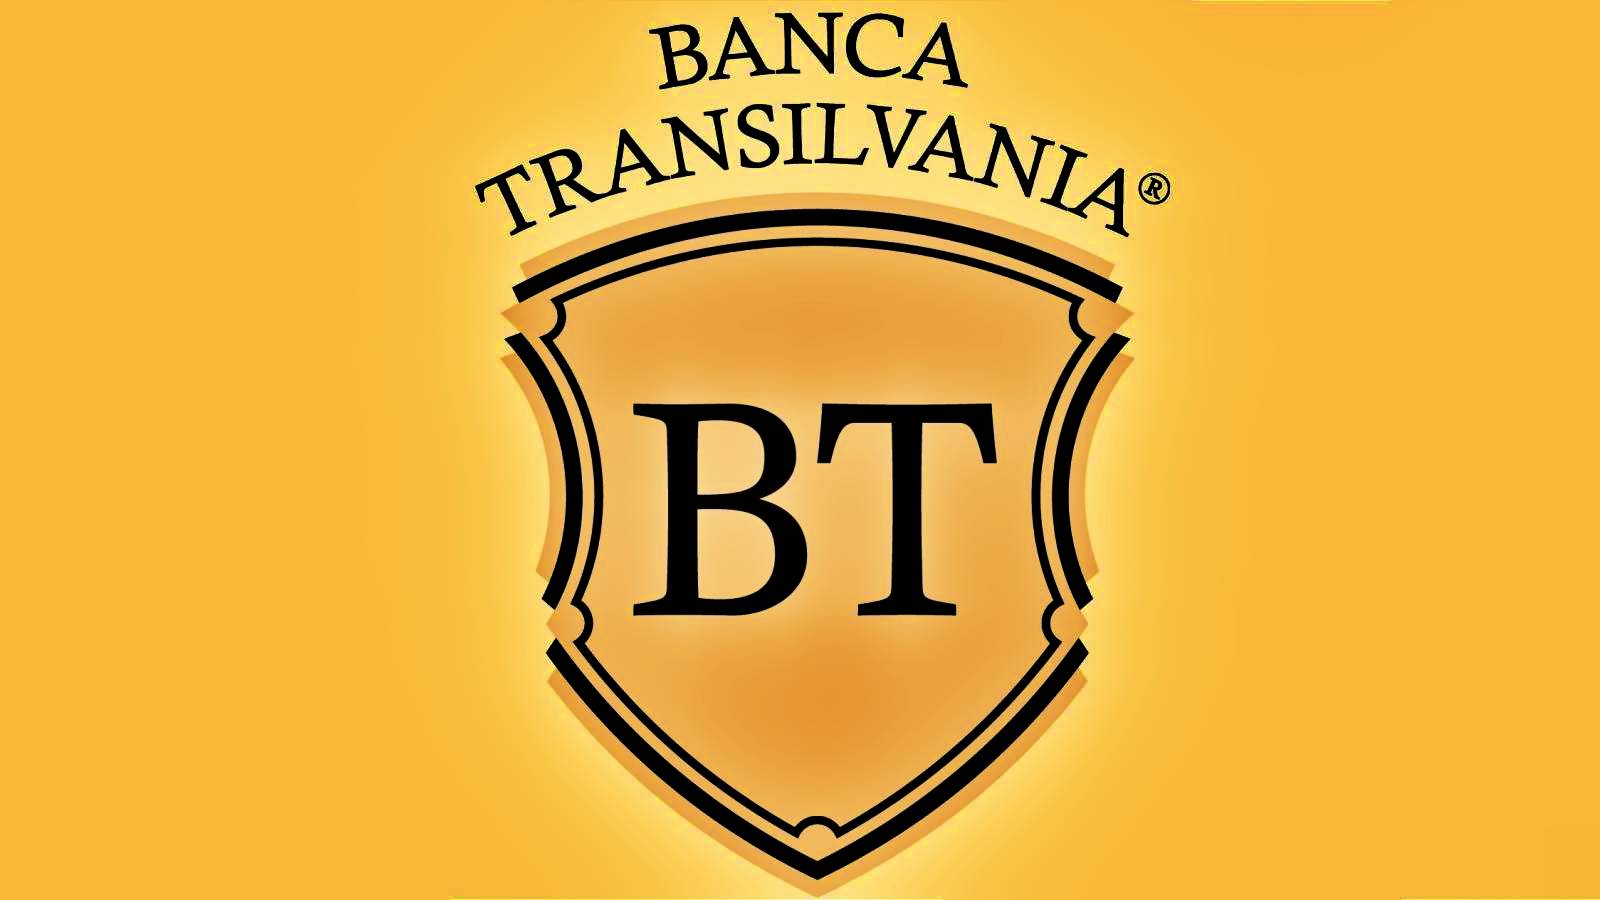 BANCA Transilvania ALERTA Serioasa Vizeaza Clientii Romania